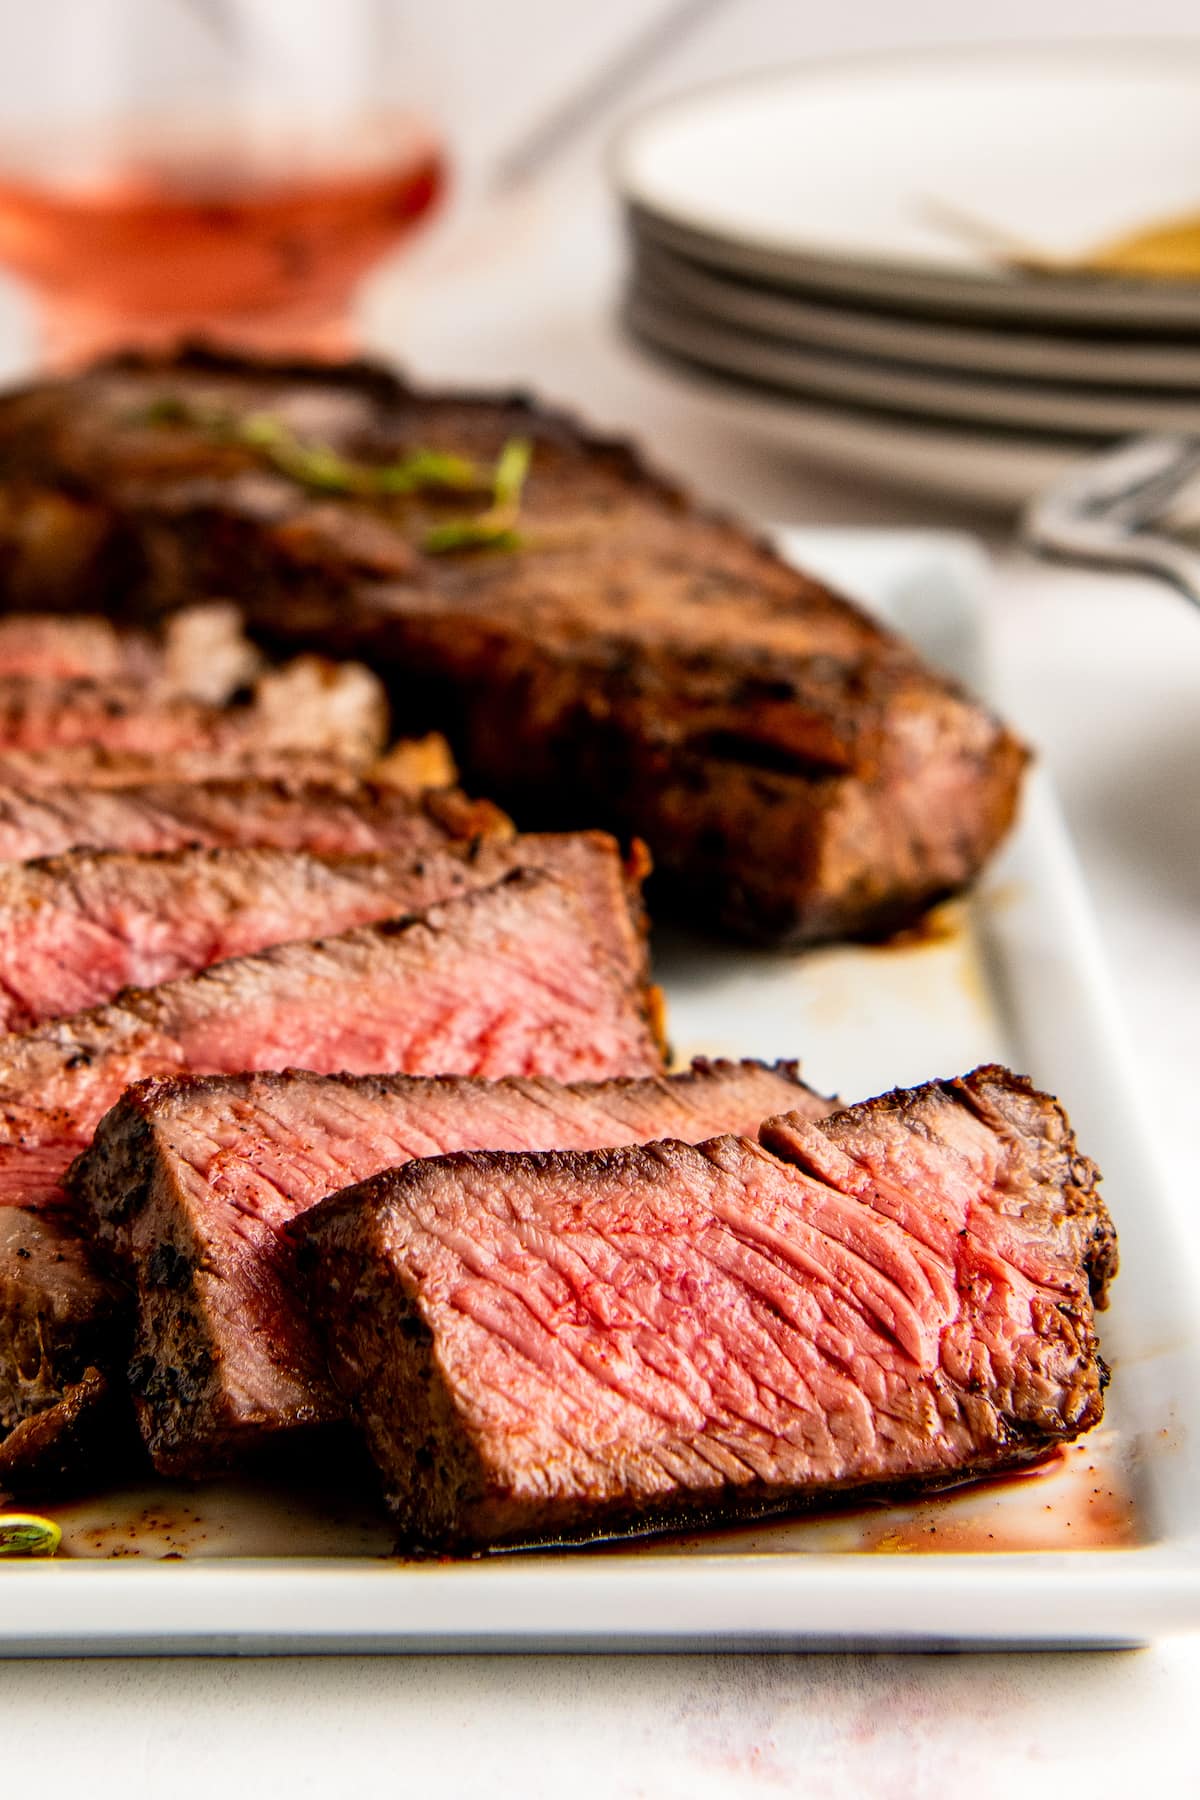 Slices of steak on a white serving platter.